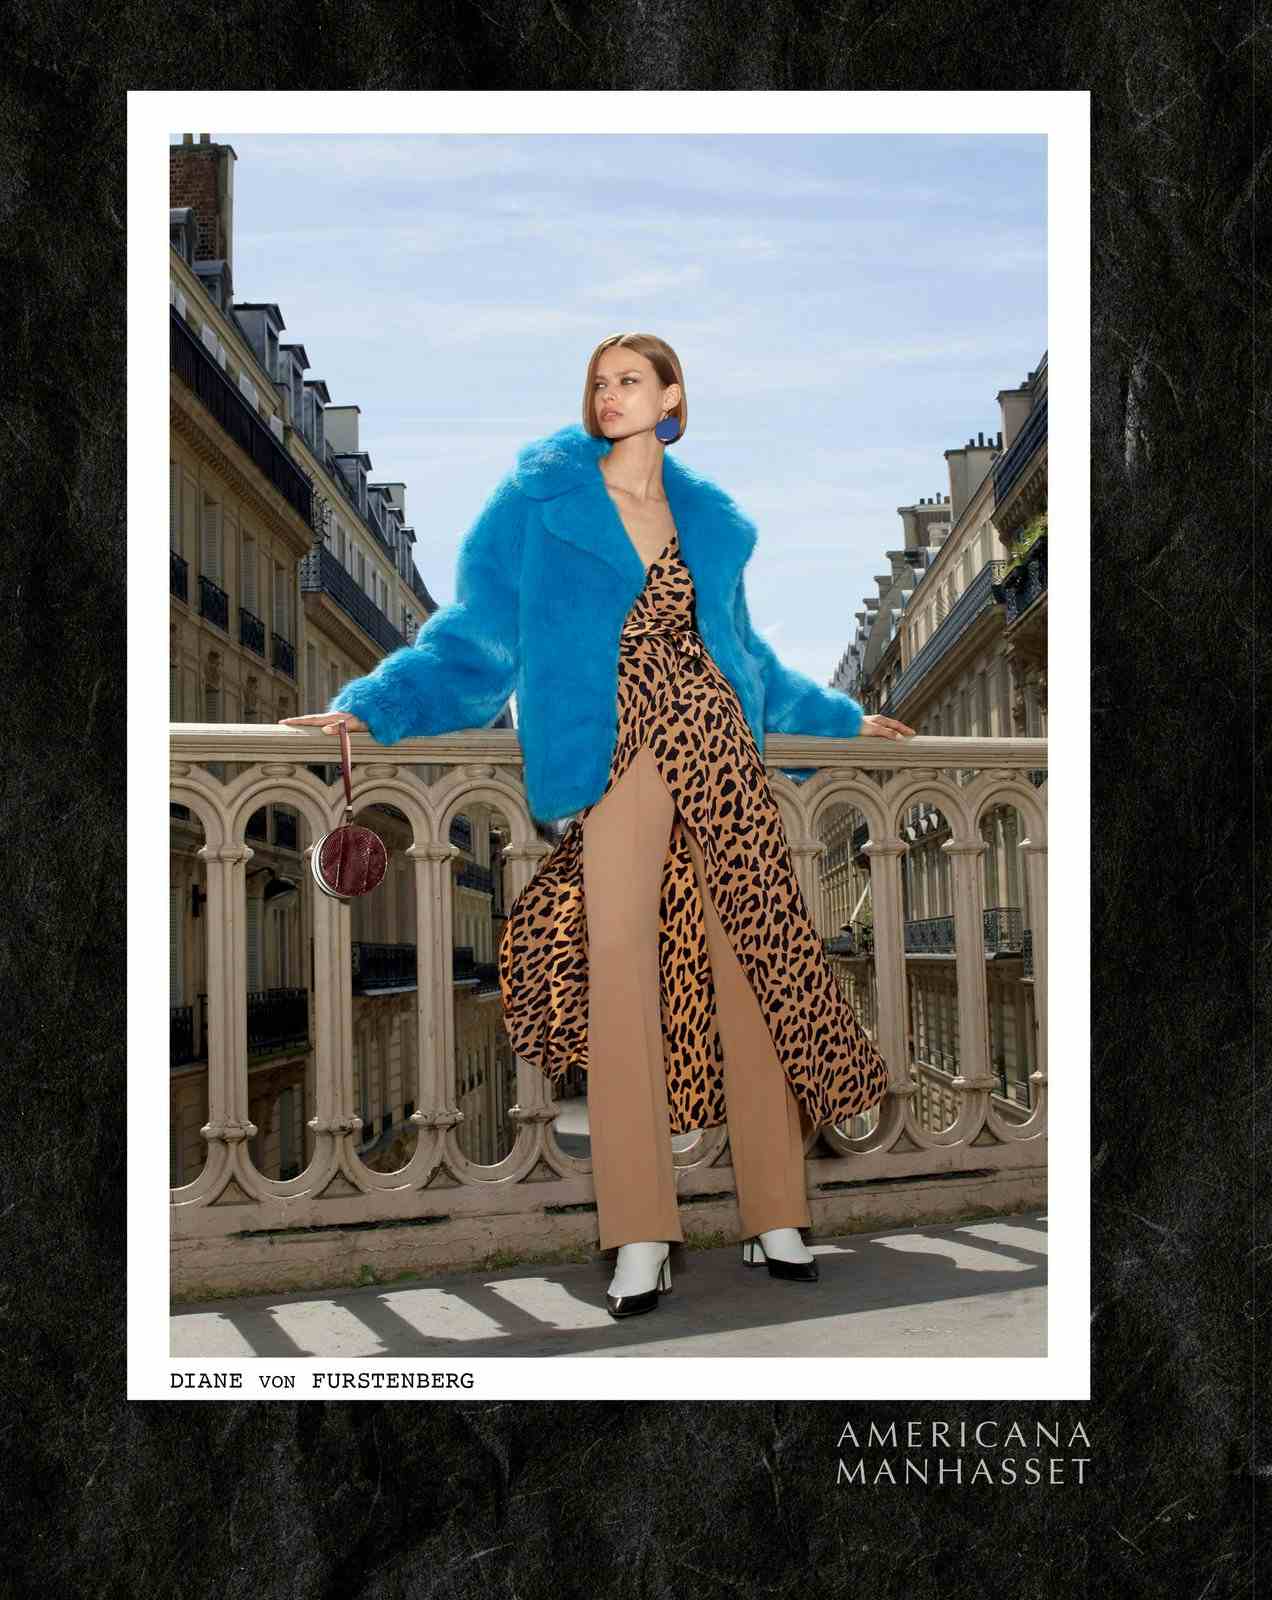 AMERICANA MANHASSET - Fall 2017
Photographer: Laspata & Decaro
Model: Birgit Kos & Salomon Diaz
Stylist: Tara Moser
Location: Paris, France